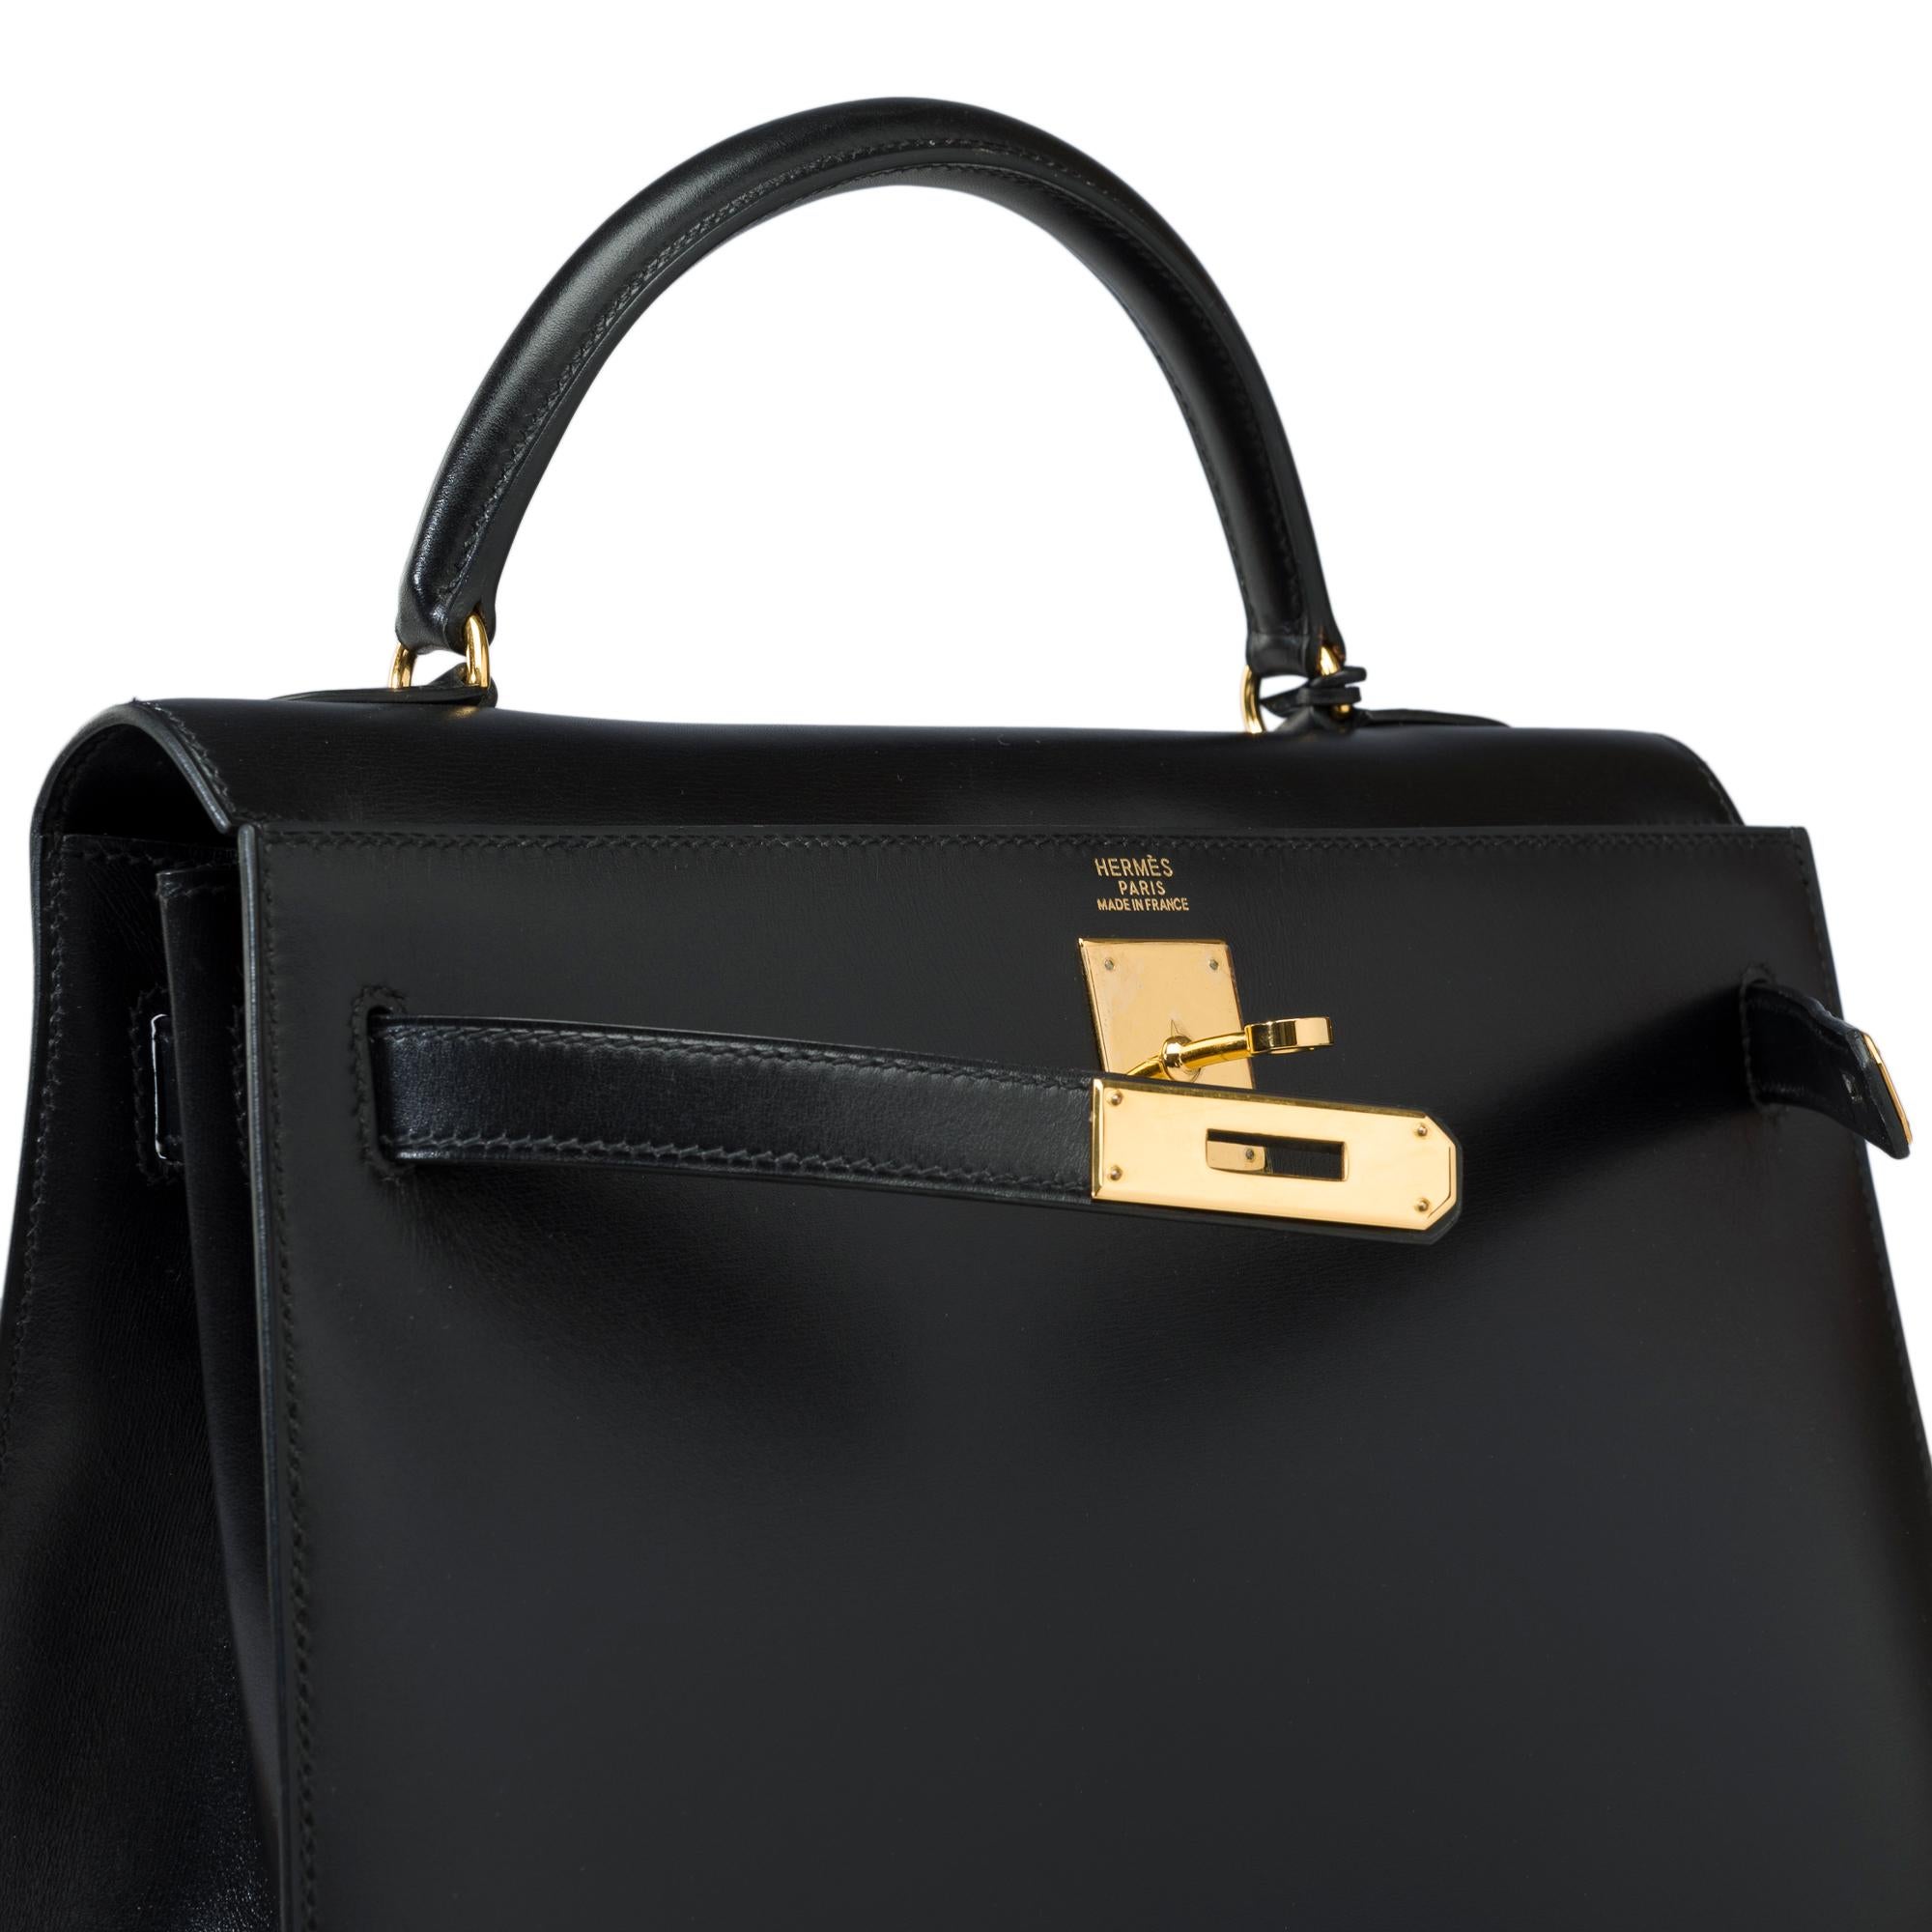 Stunning Hermès Kelly 32 sellier handbag strap in Black Box Calf leather, GHW For Sale 3